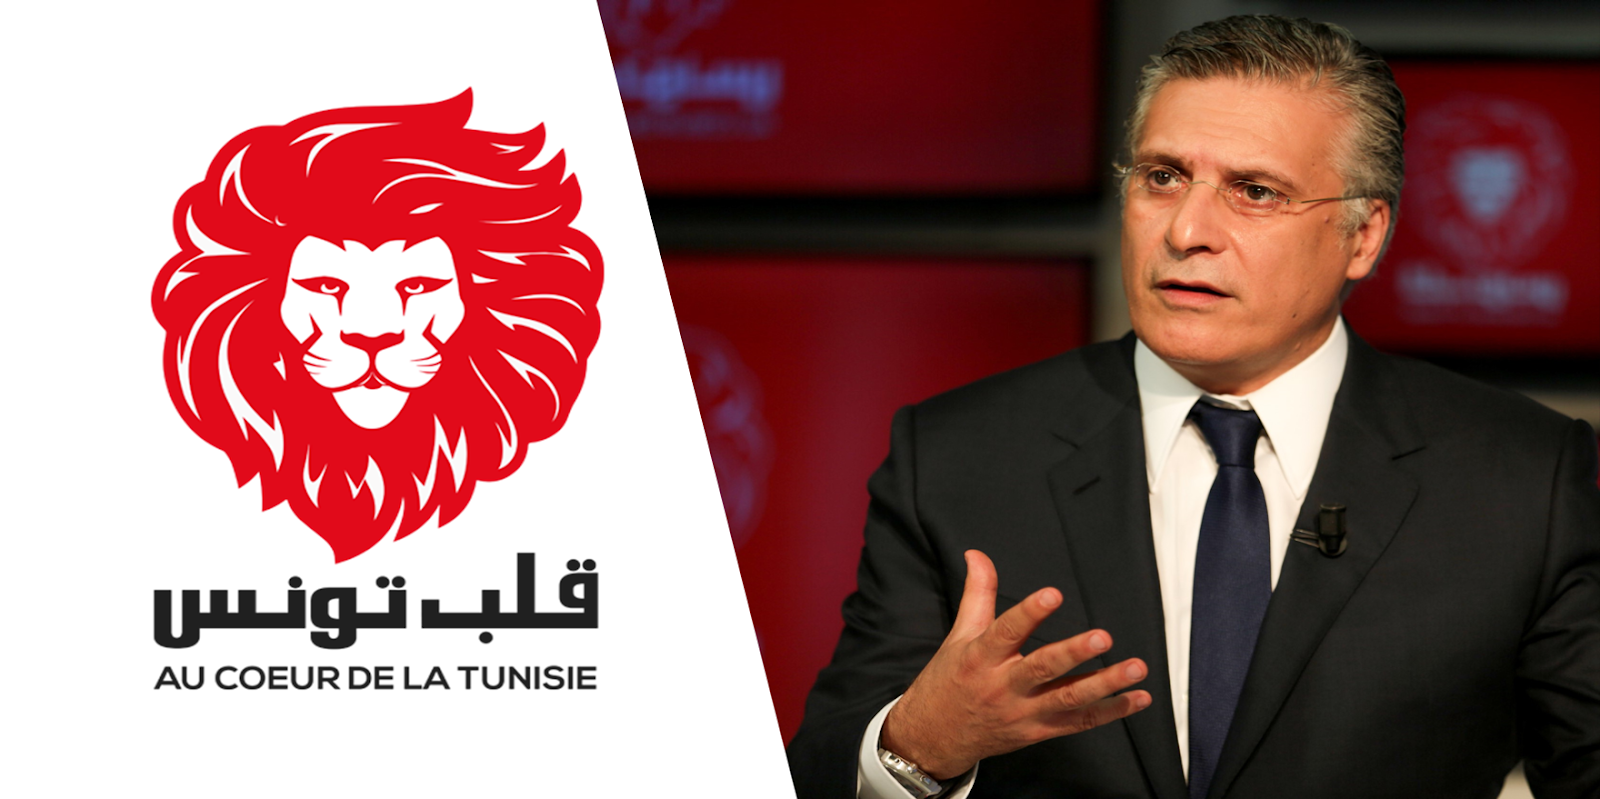 Tunisia: Heart of Tunisia loses 11 lawmakers amid internal crisis